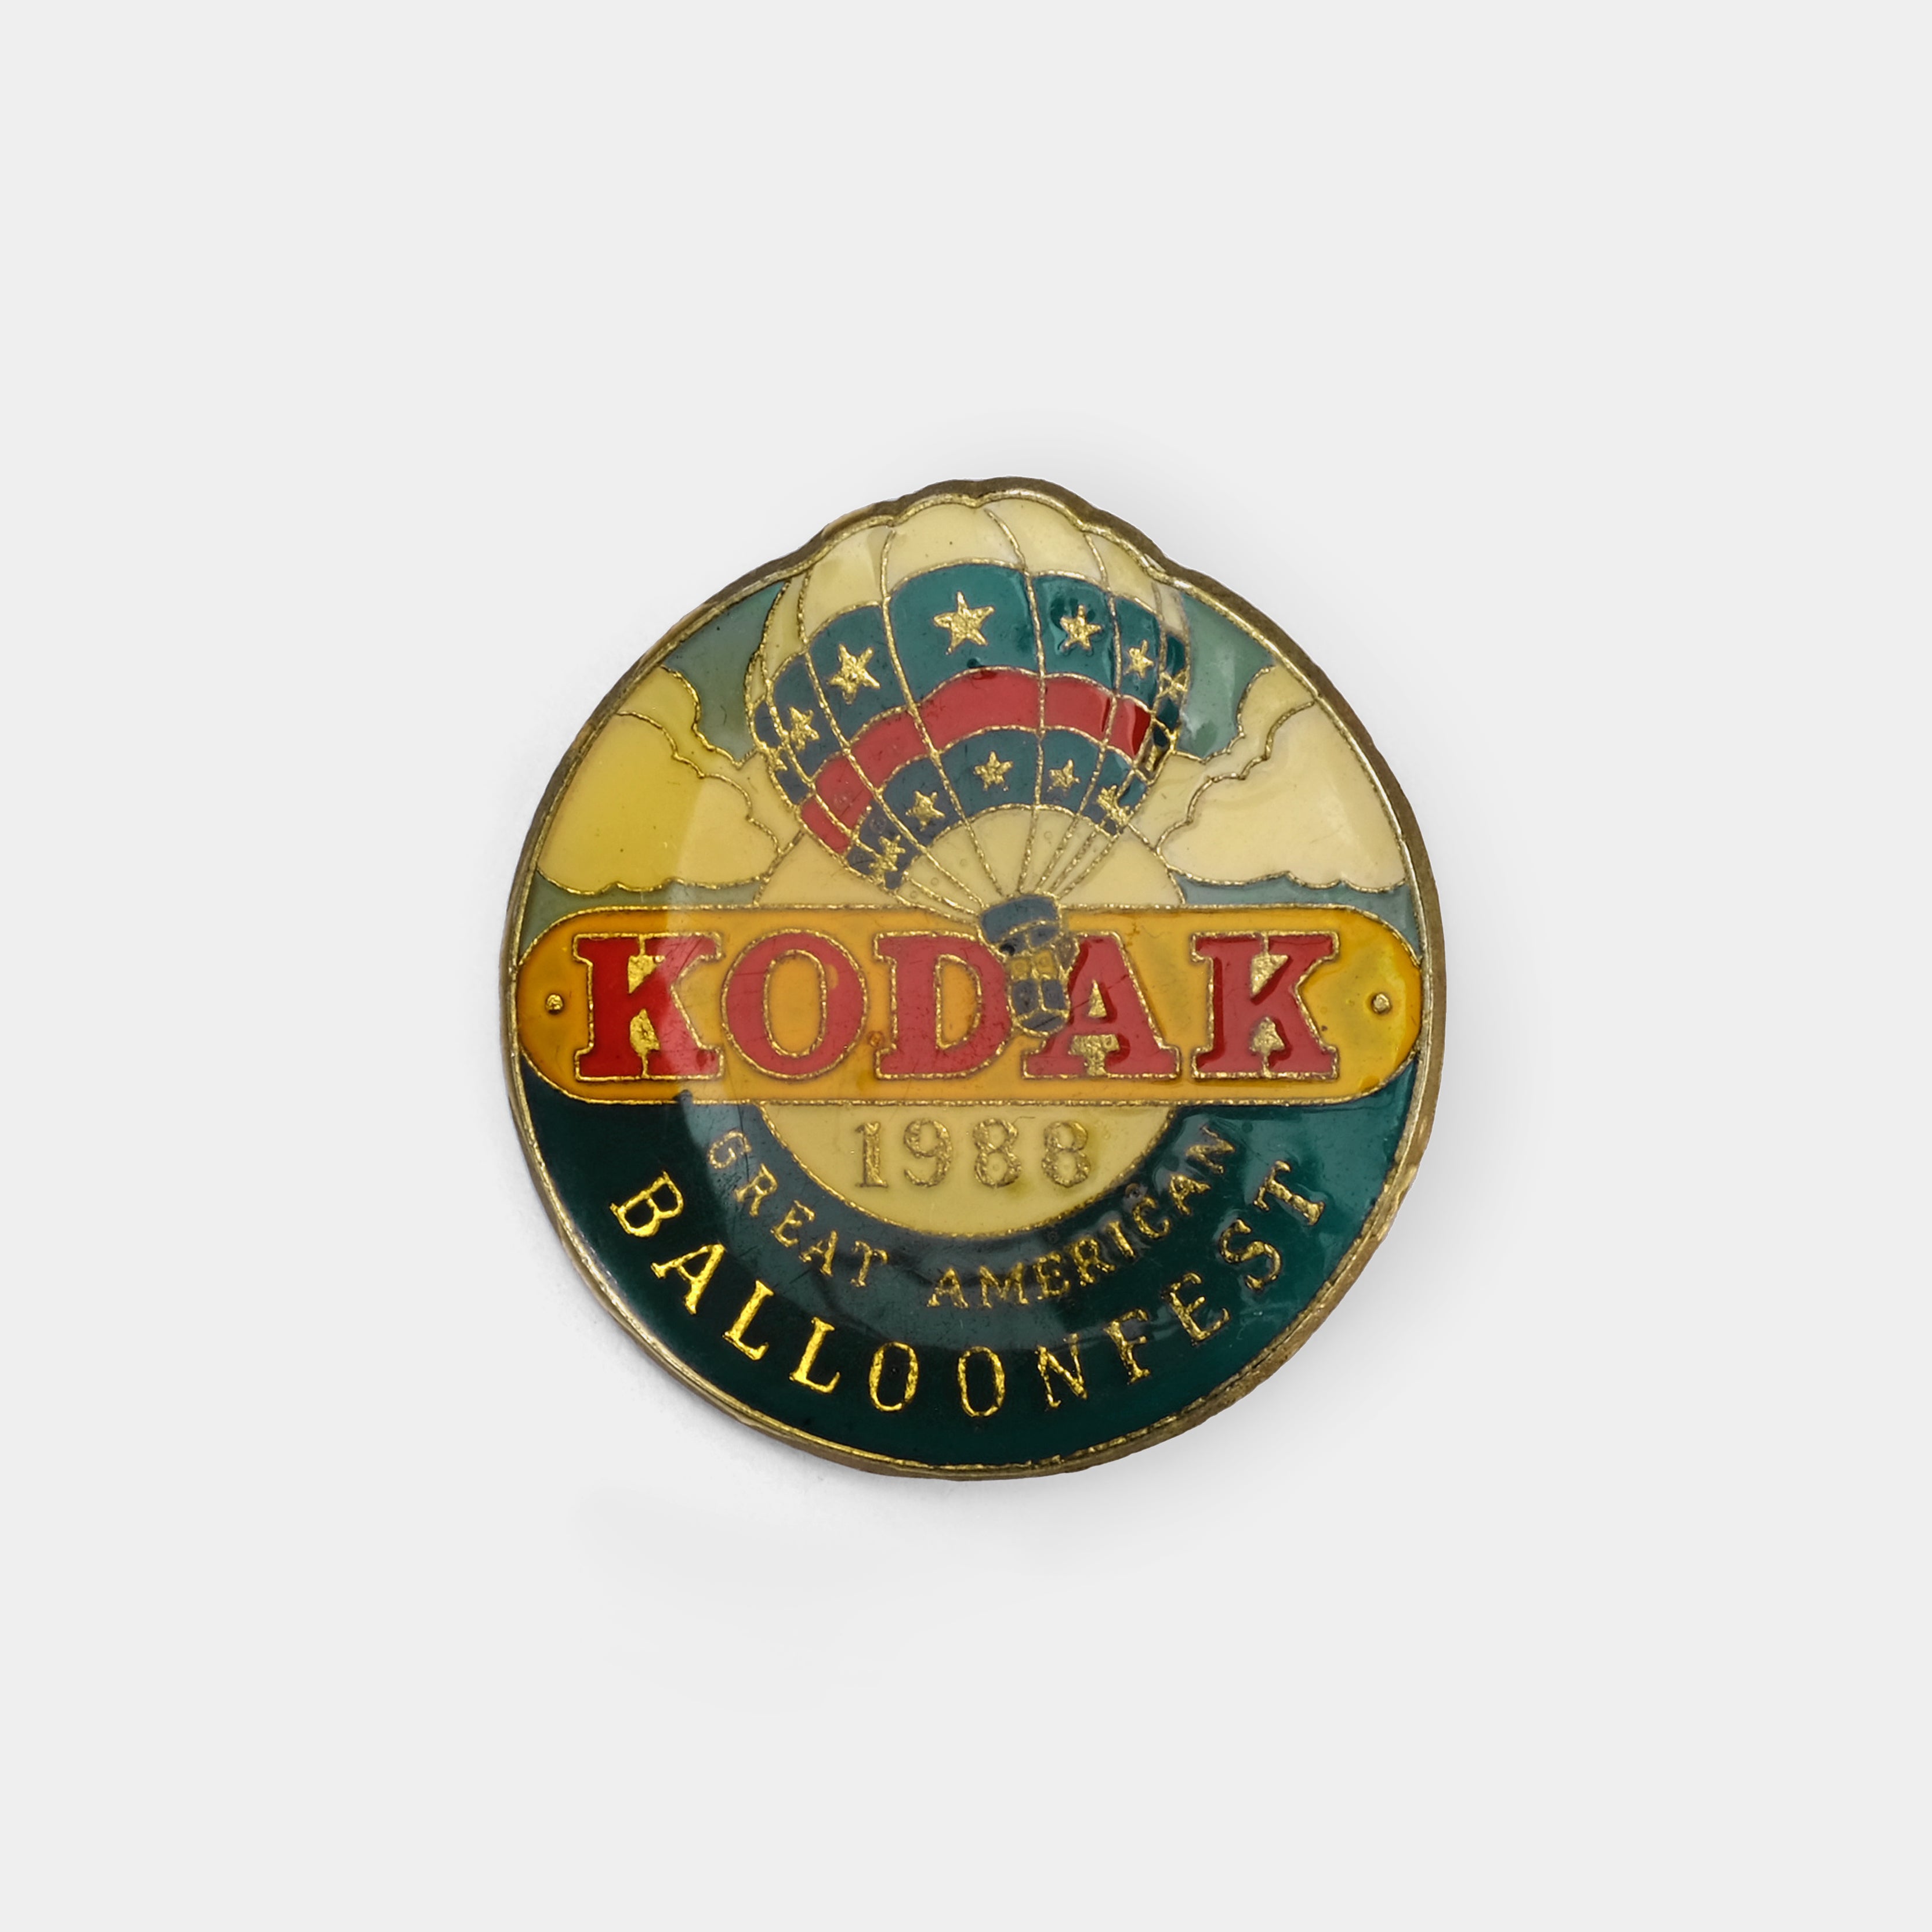 Kodak Great American Balloonfest 1988 Vintage Enamel Pin